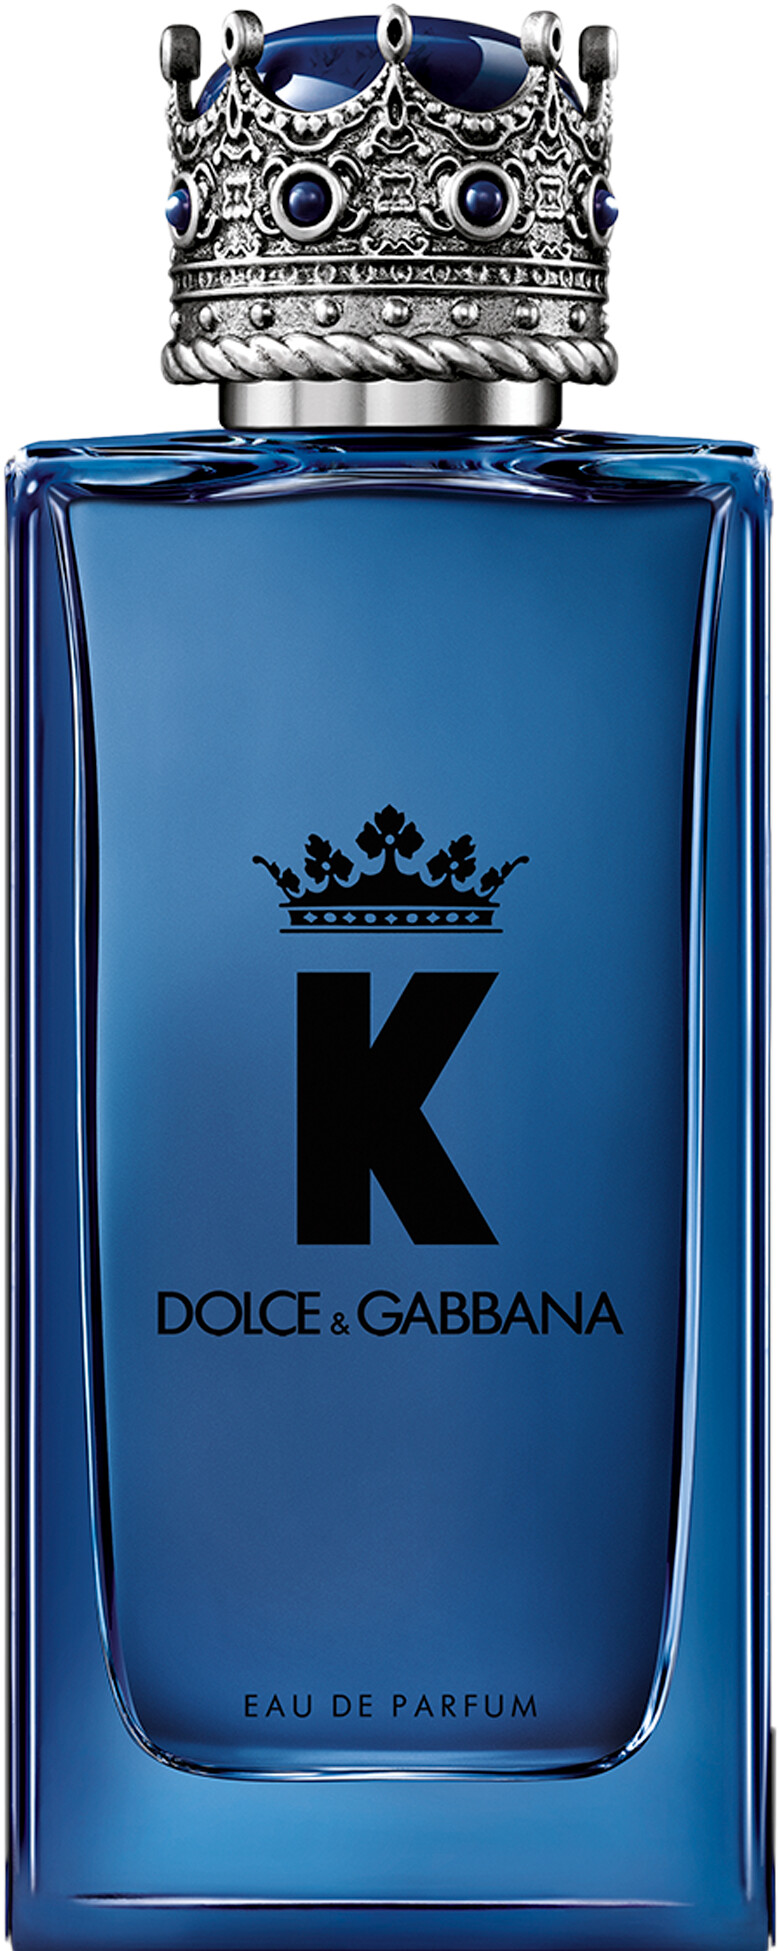 Dolce & Gabbana K By Dolce&Gabbana Eau de Parfum Spray 100ml